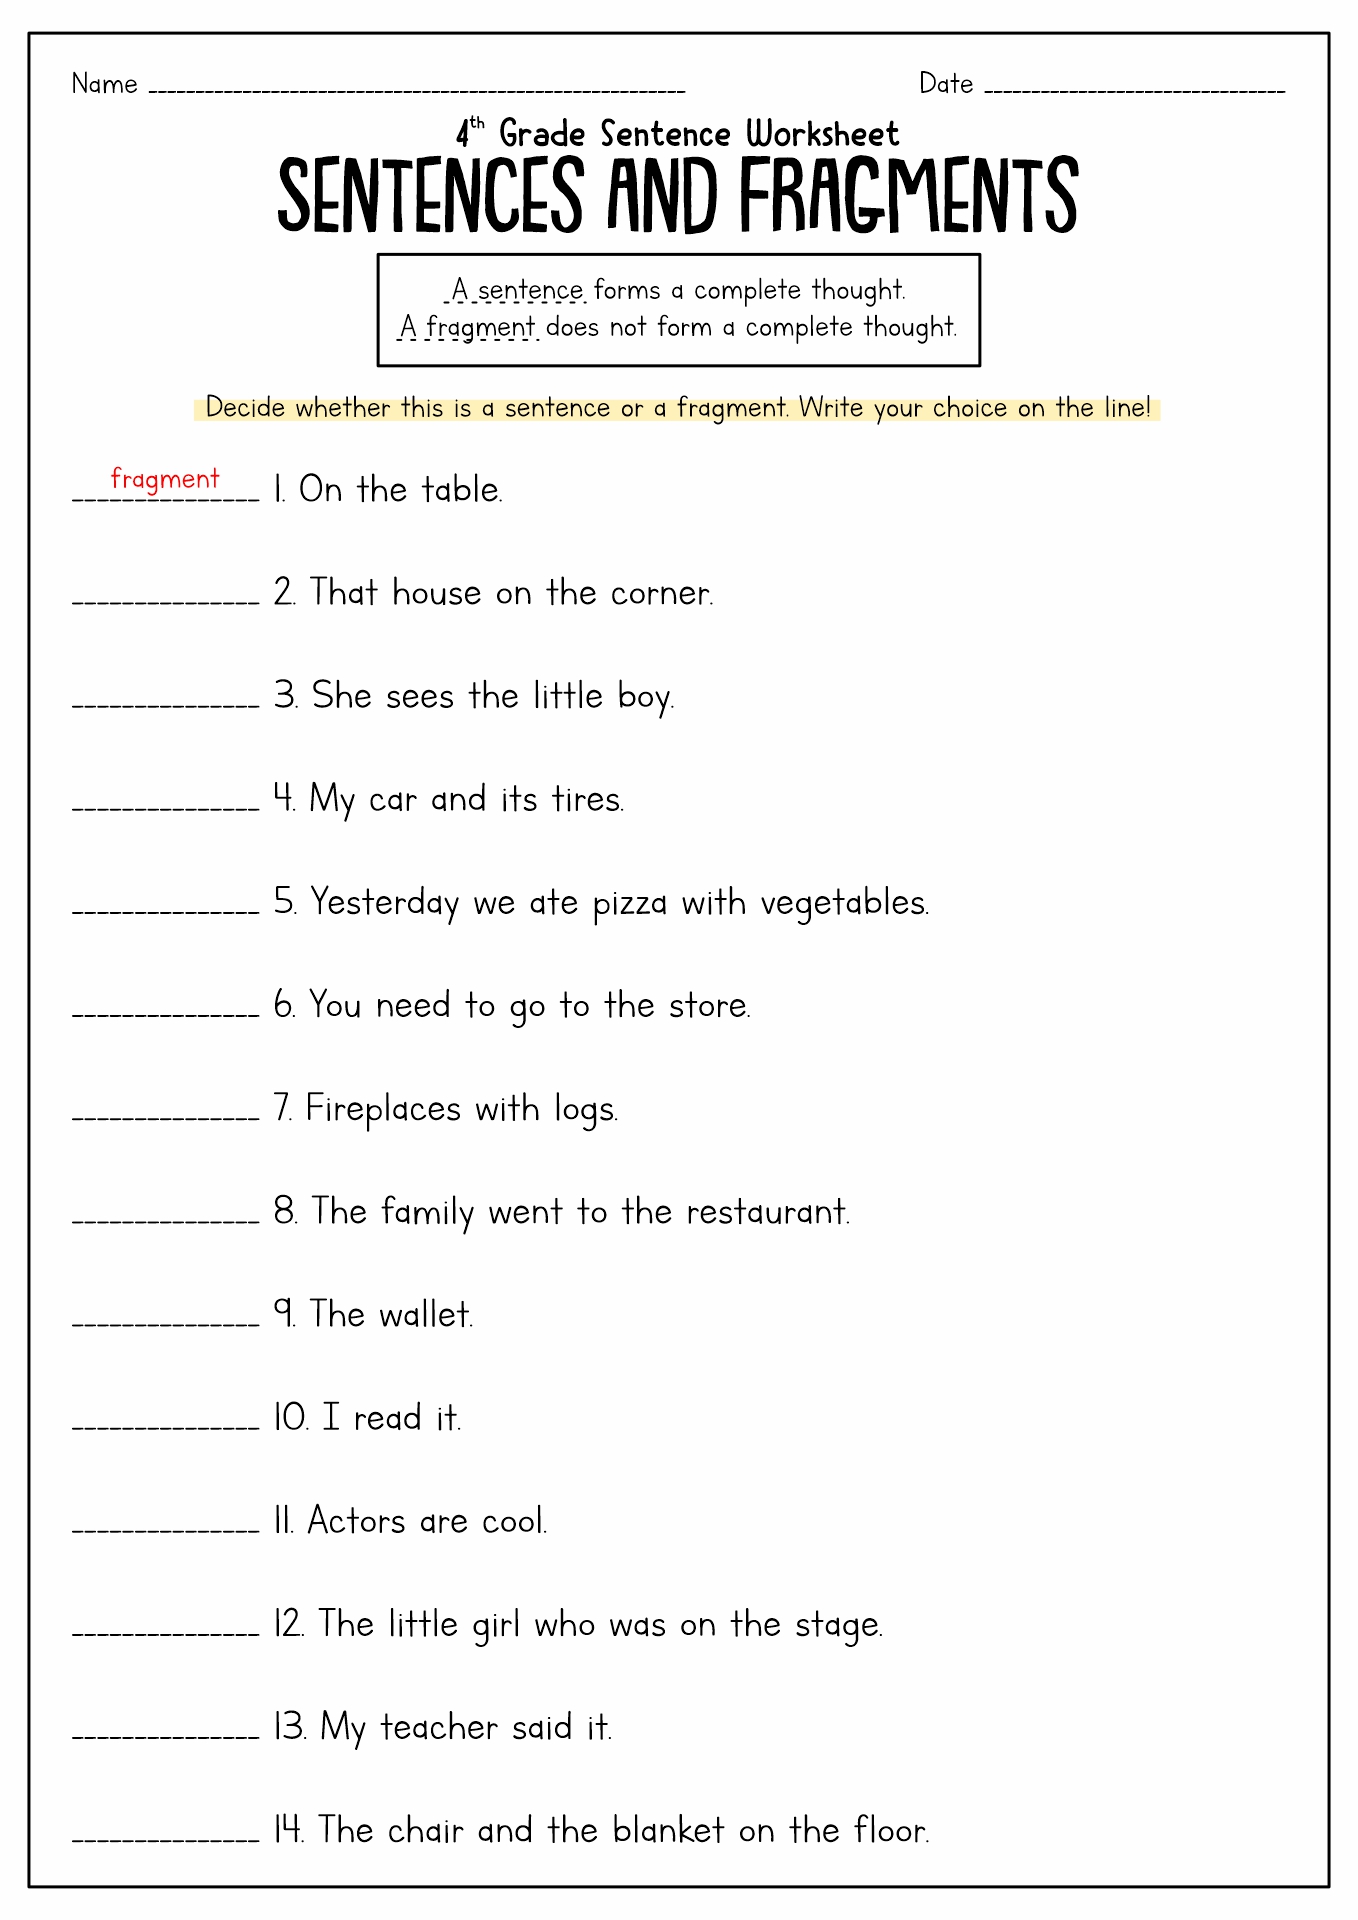 sentences-and-fragments-worksheet